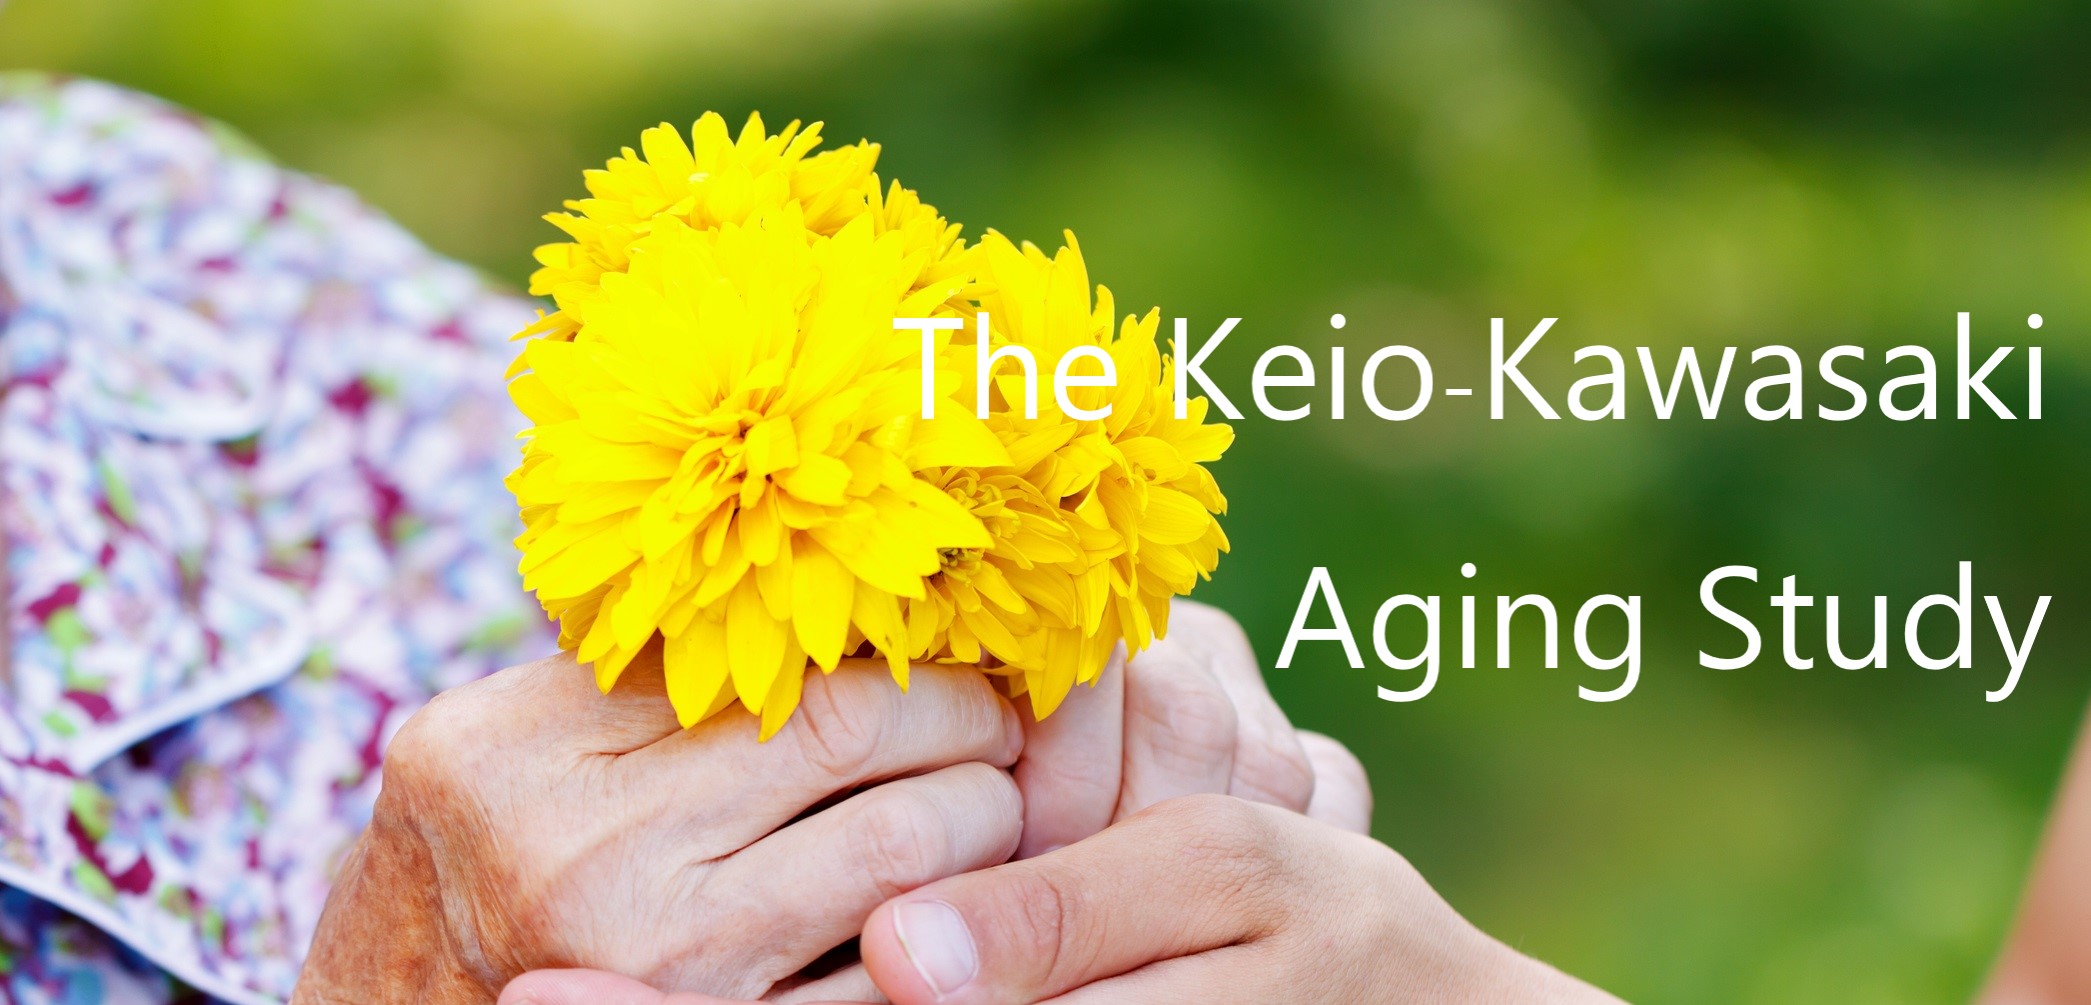 The Keio-Kawasaki Aging Study